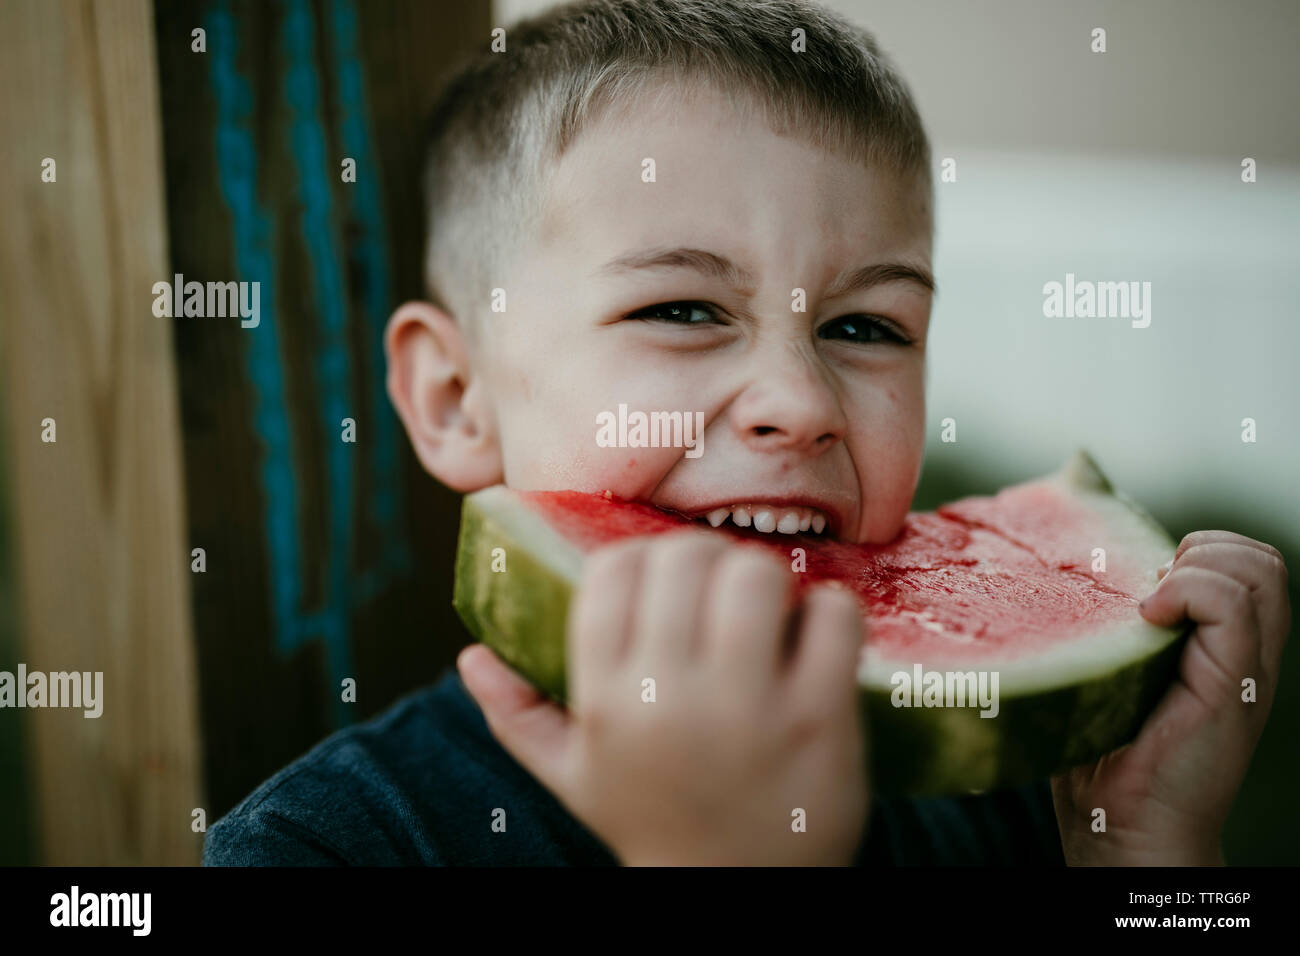 Portrait of boy eating watermelon Stock Photo